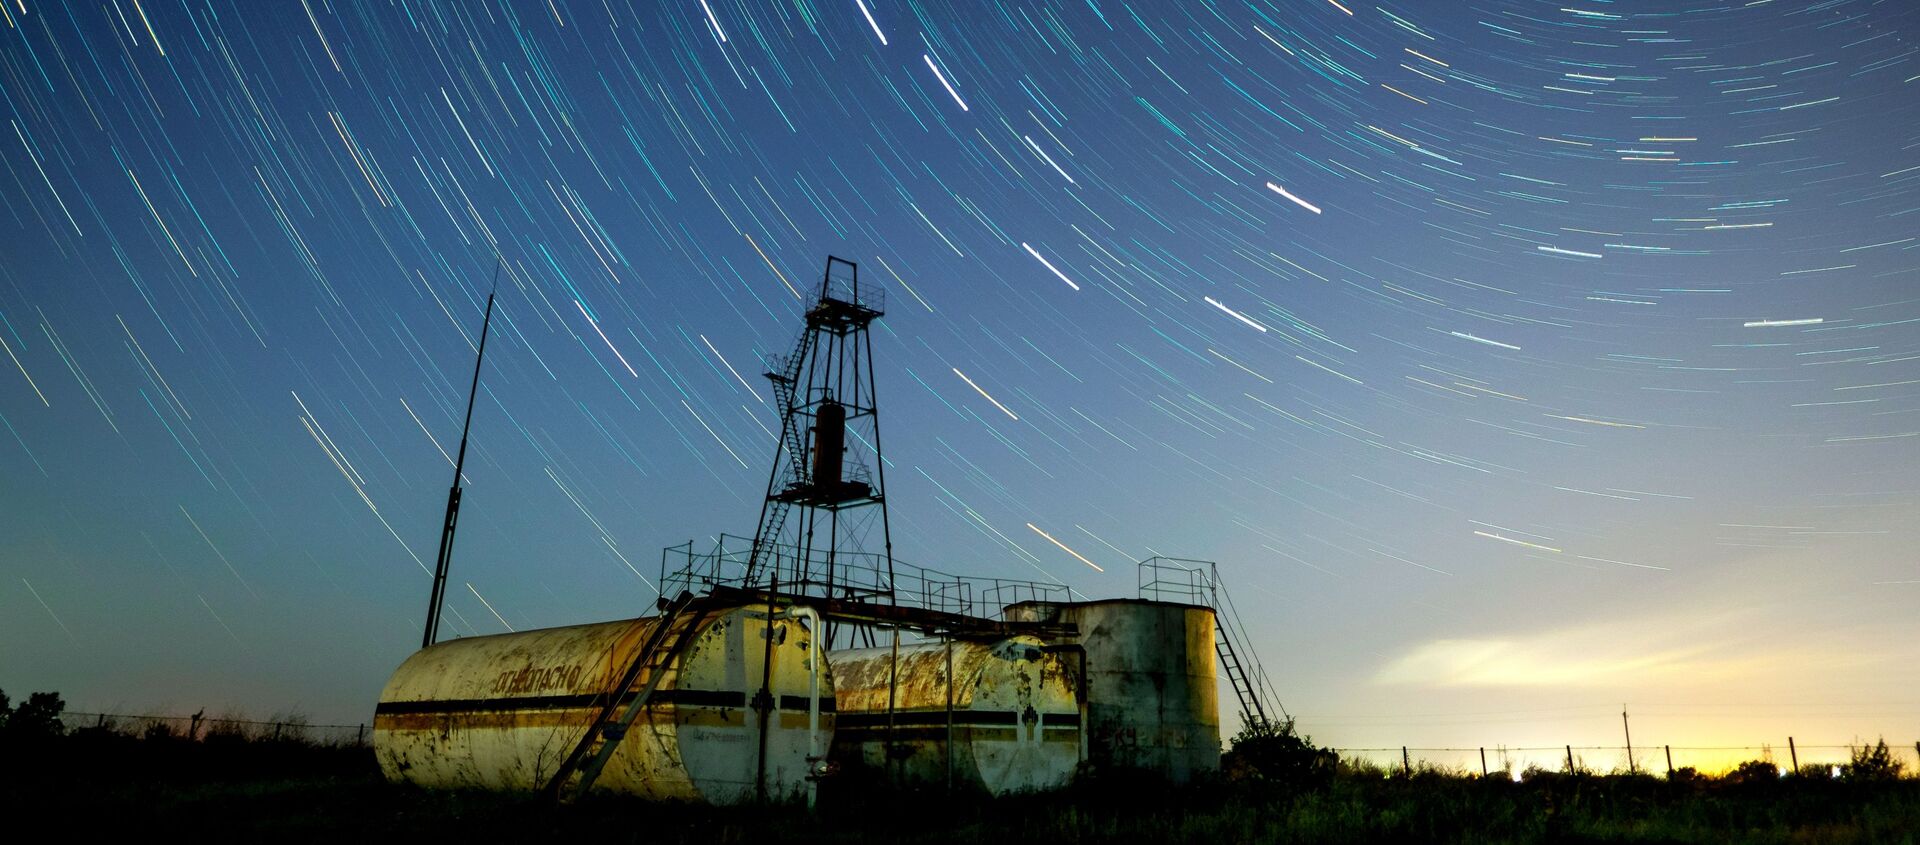 Звездное небо во время метеорного потока. Архивное фото - Sputnik Кыргызстан, 1920, 13.06.2021